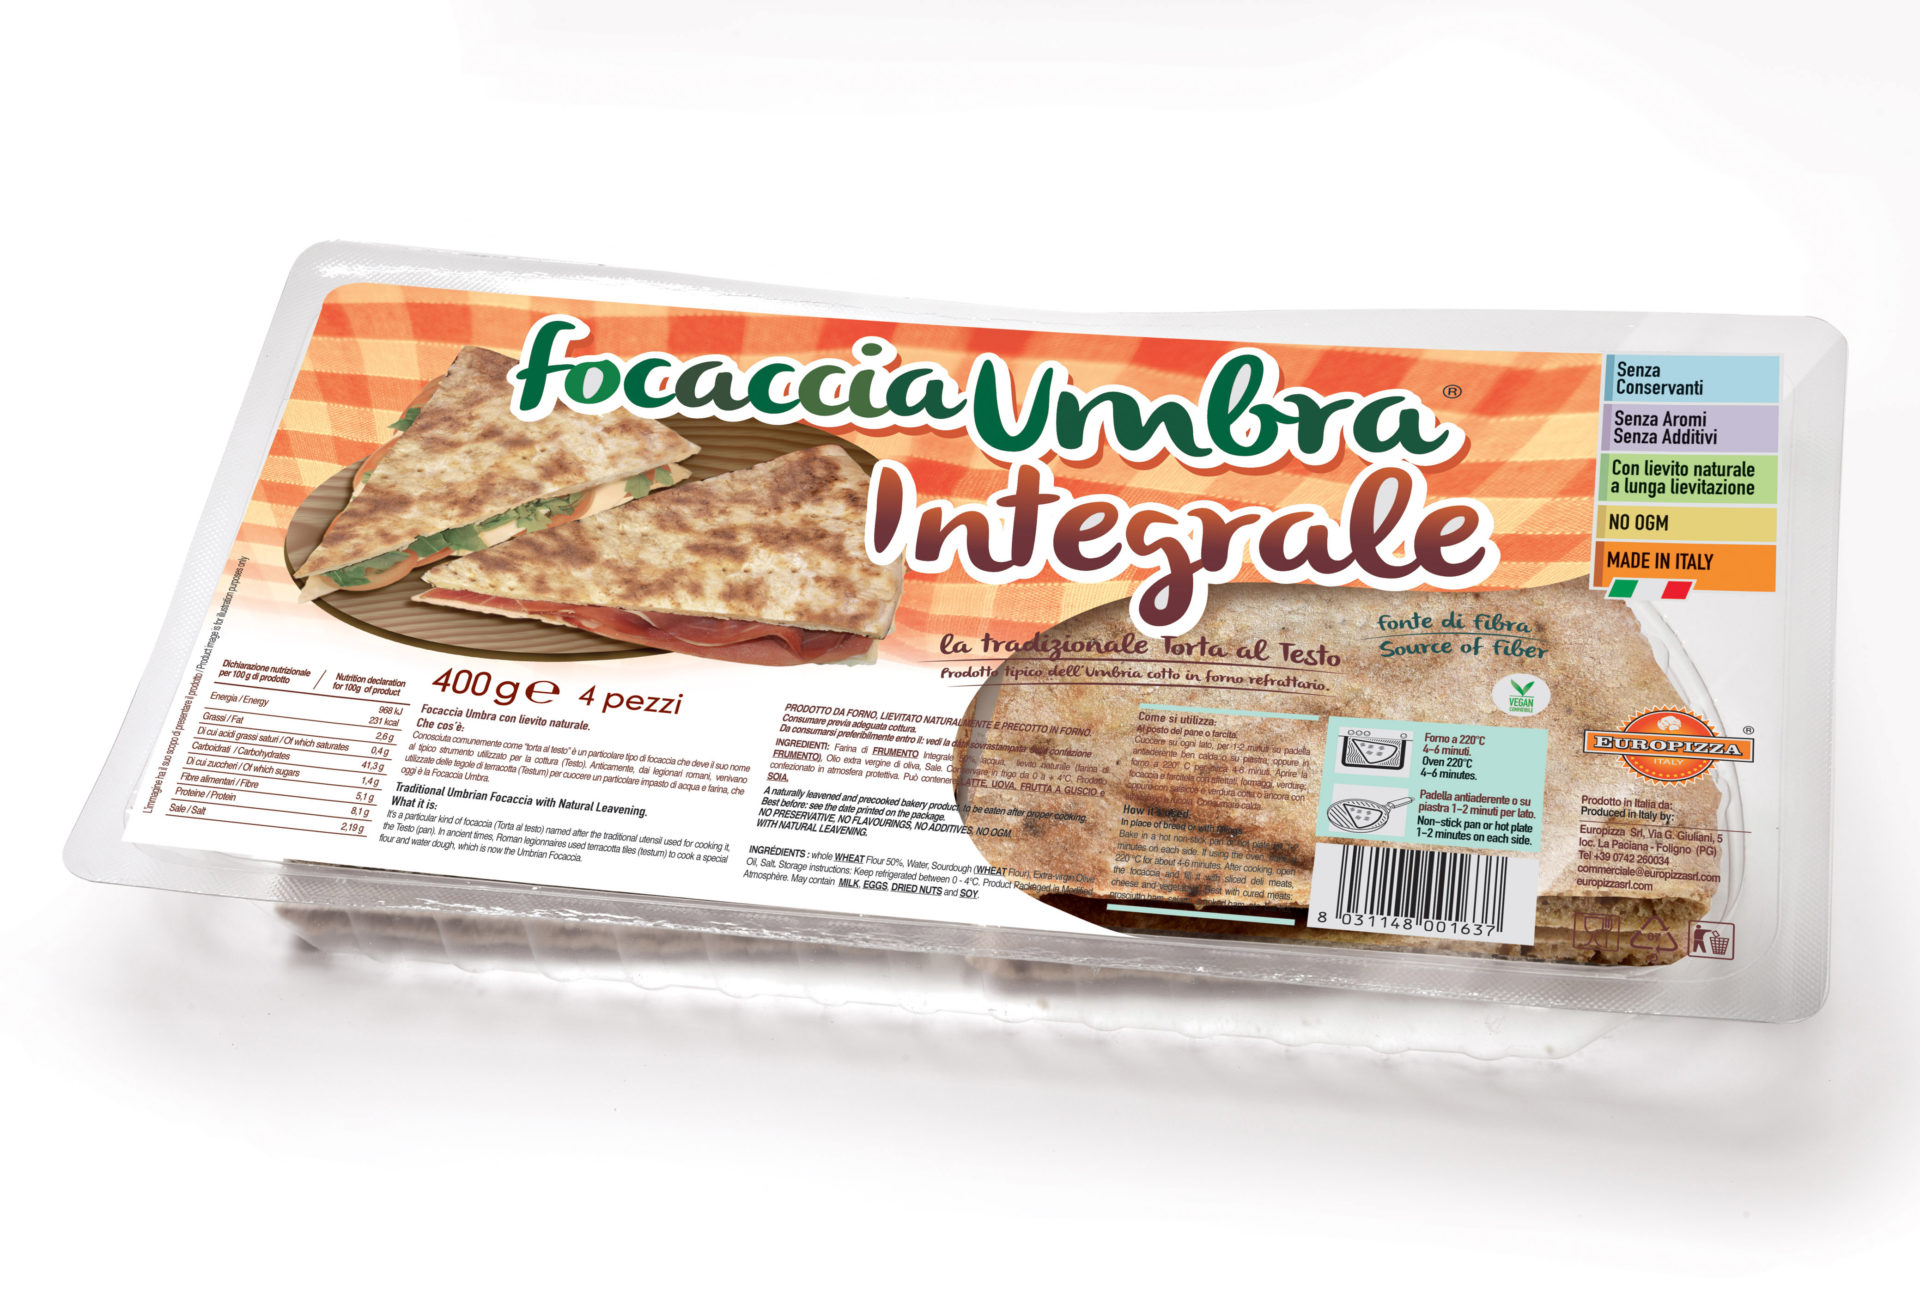 Progettazione Packaging focaccia Umbra Integrale Studiovagnetti Perugia